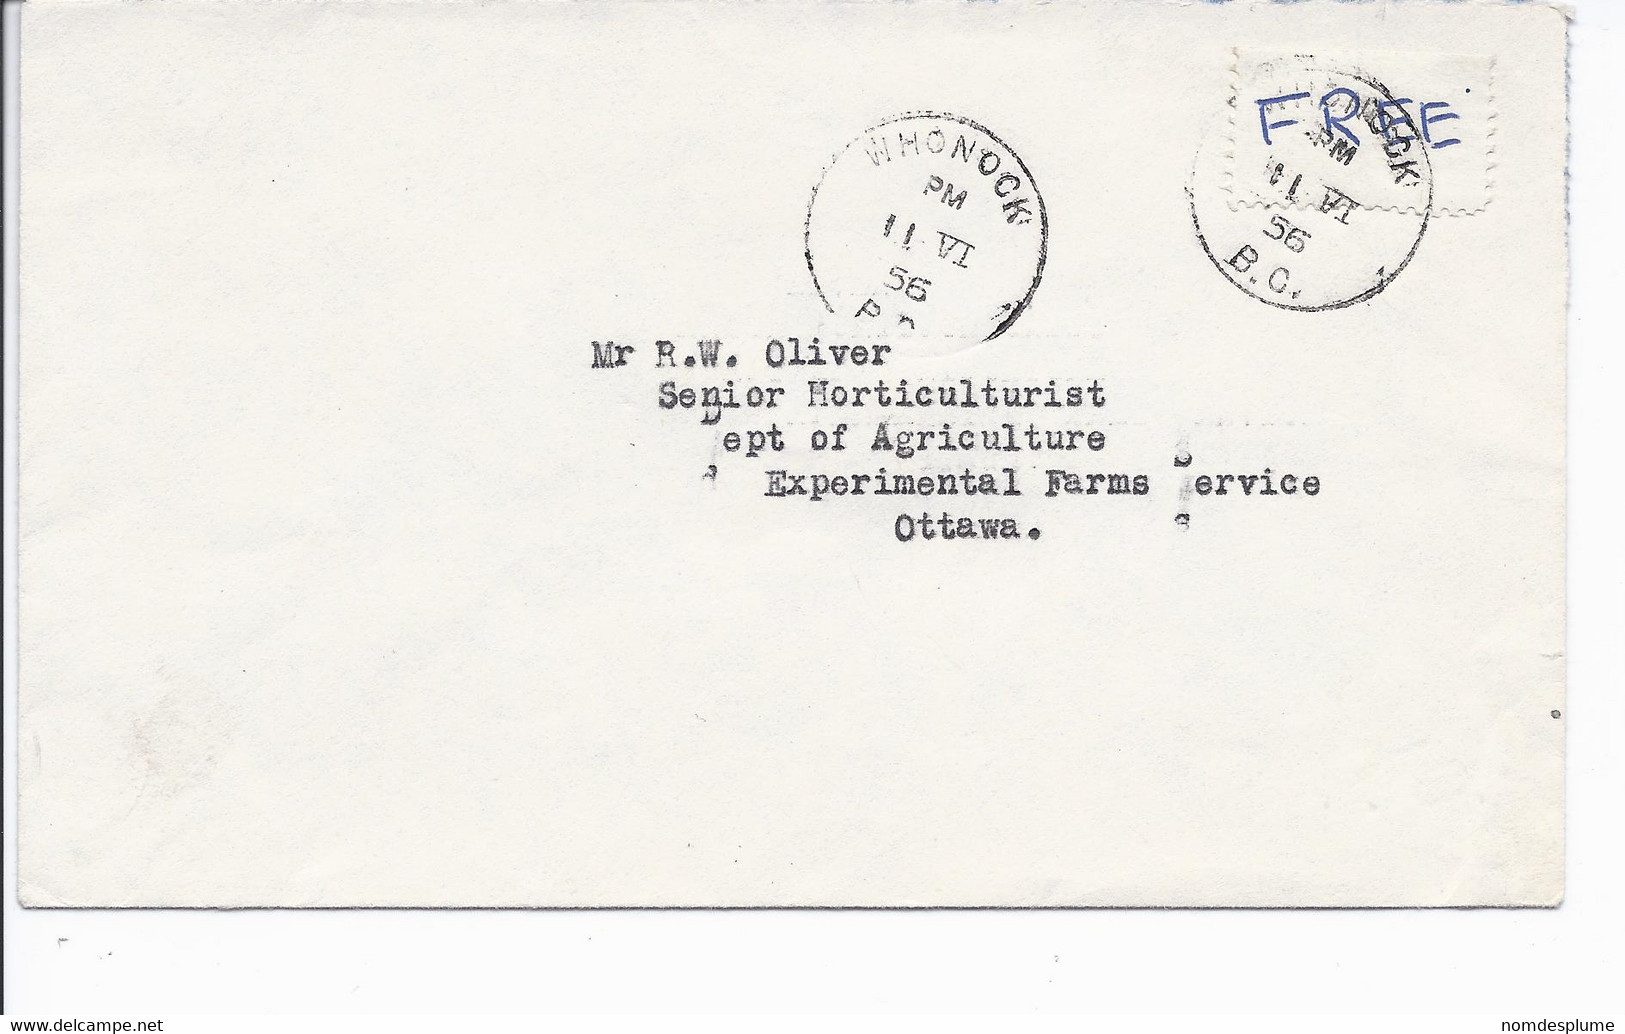 16445) Canada Cover Brief Lettre 1956 Closed BC British Columbia Postmark Cancel Free - Brieven En Documenten